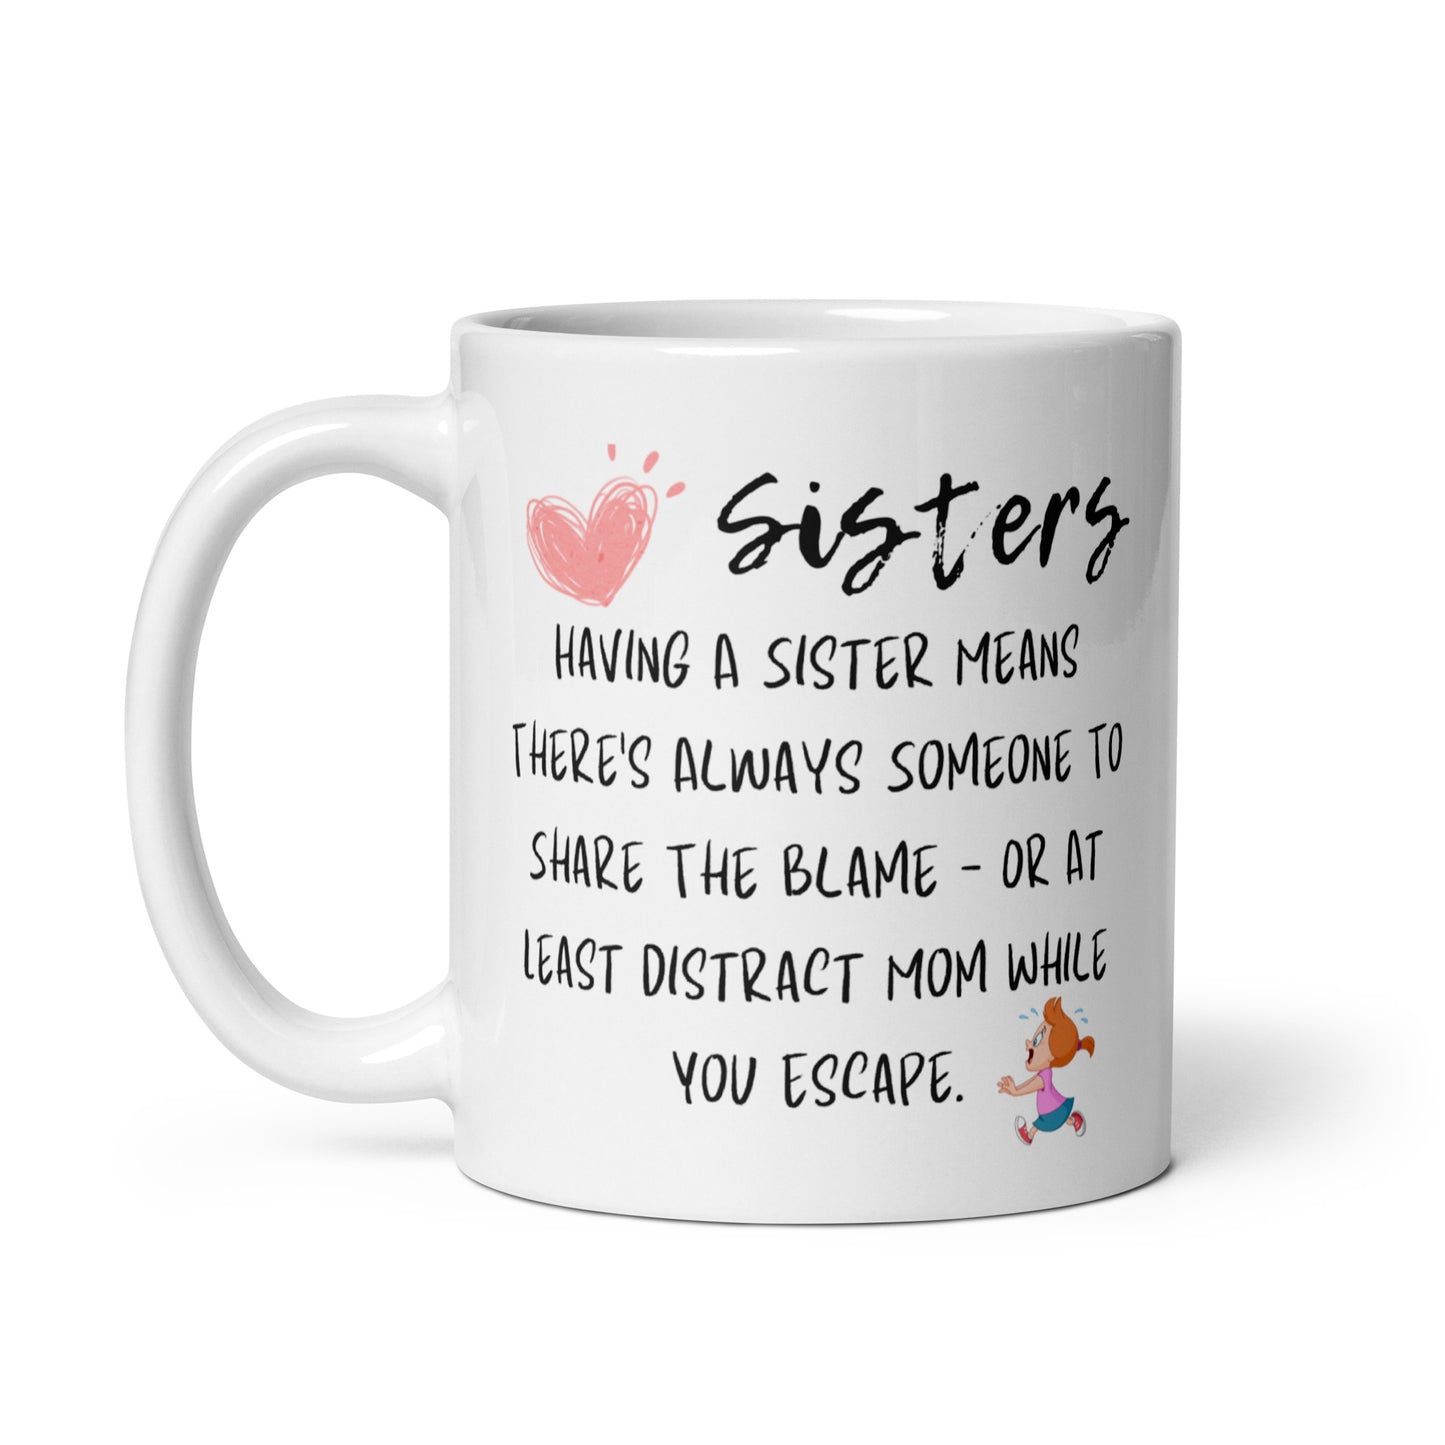 Sisters Mug - Share The Blame White Glossy Mug